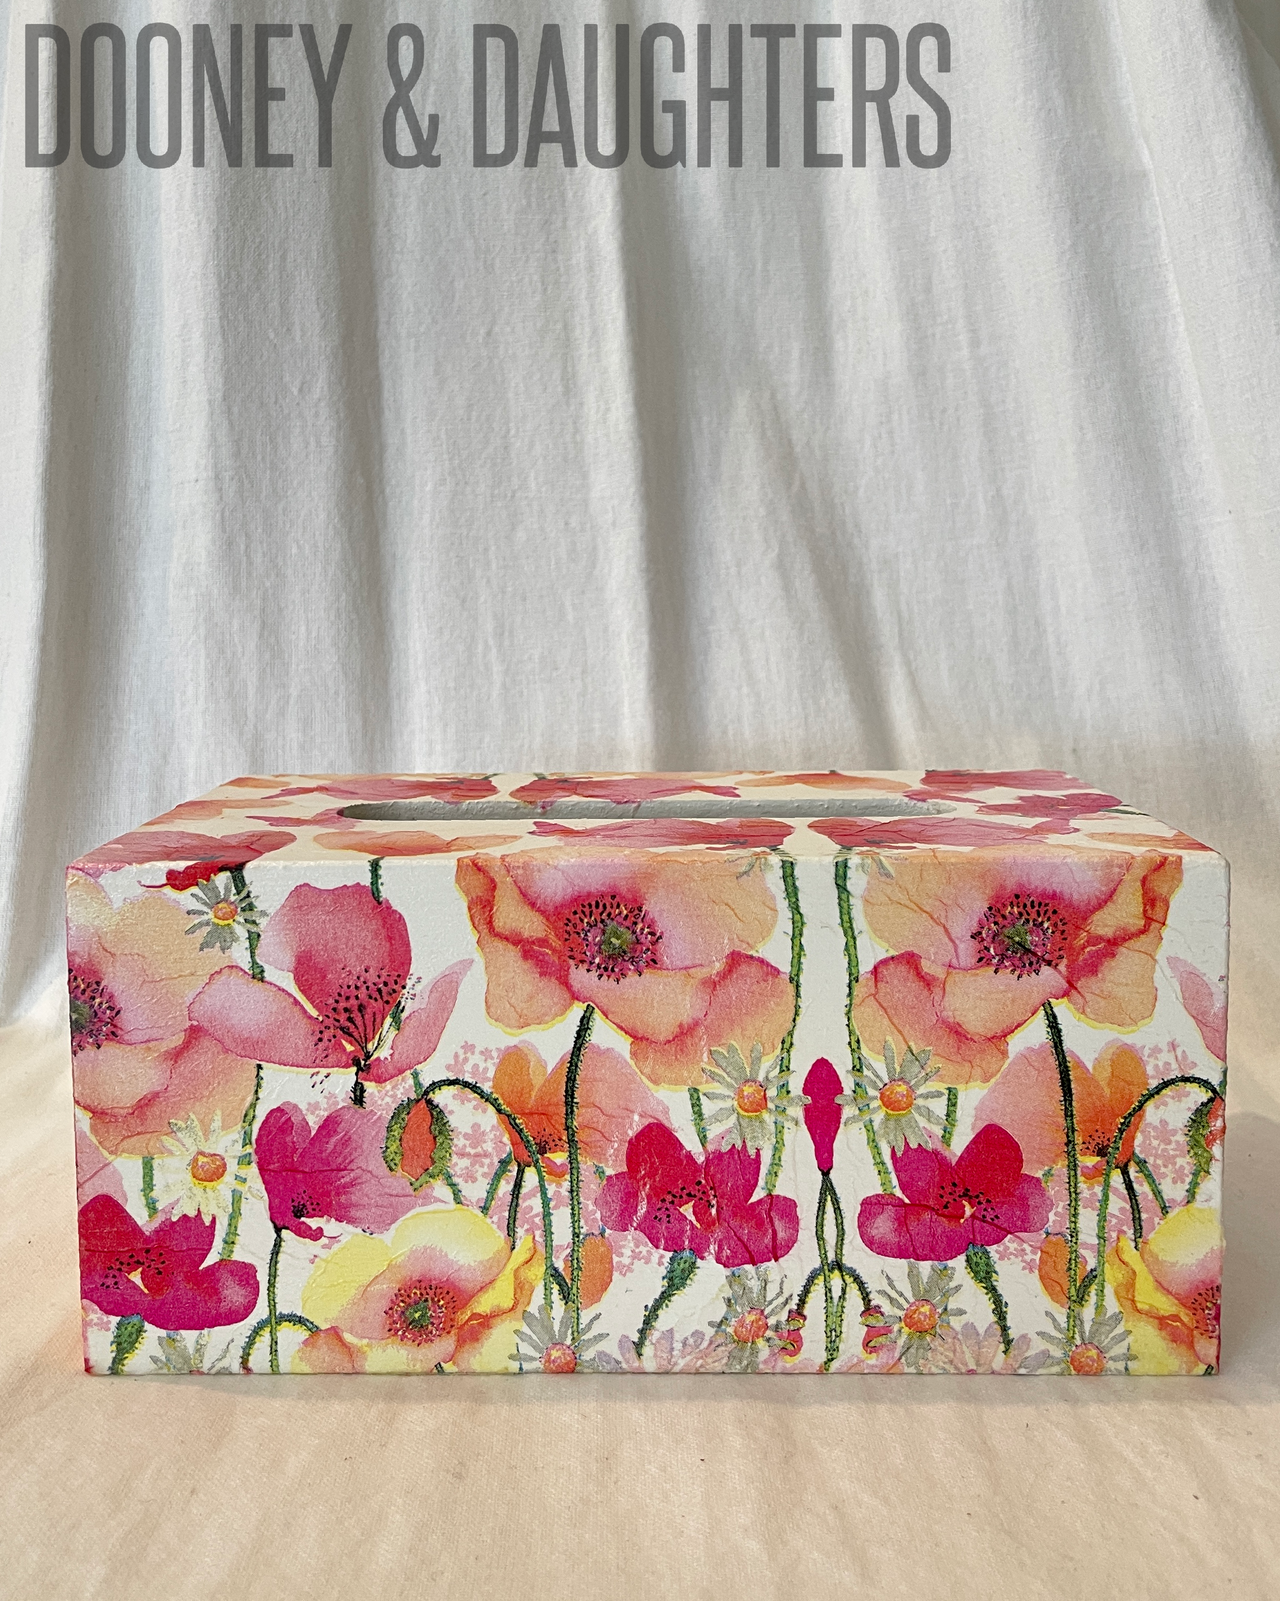 Aquarell Poppies & Daisies Rectangle Tissue Box